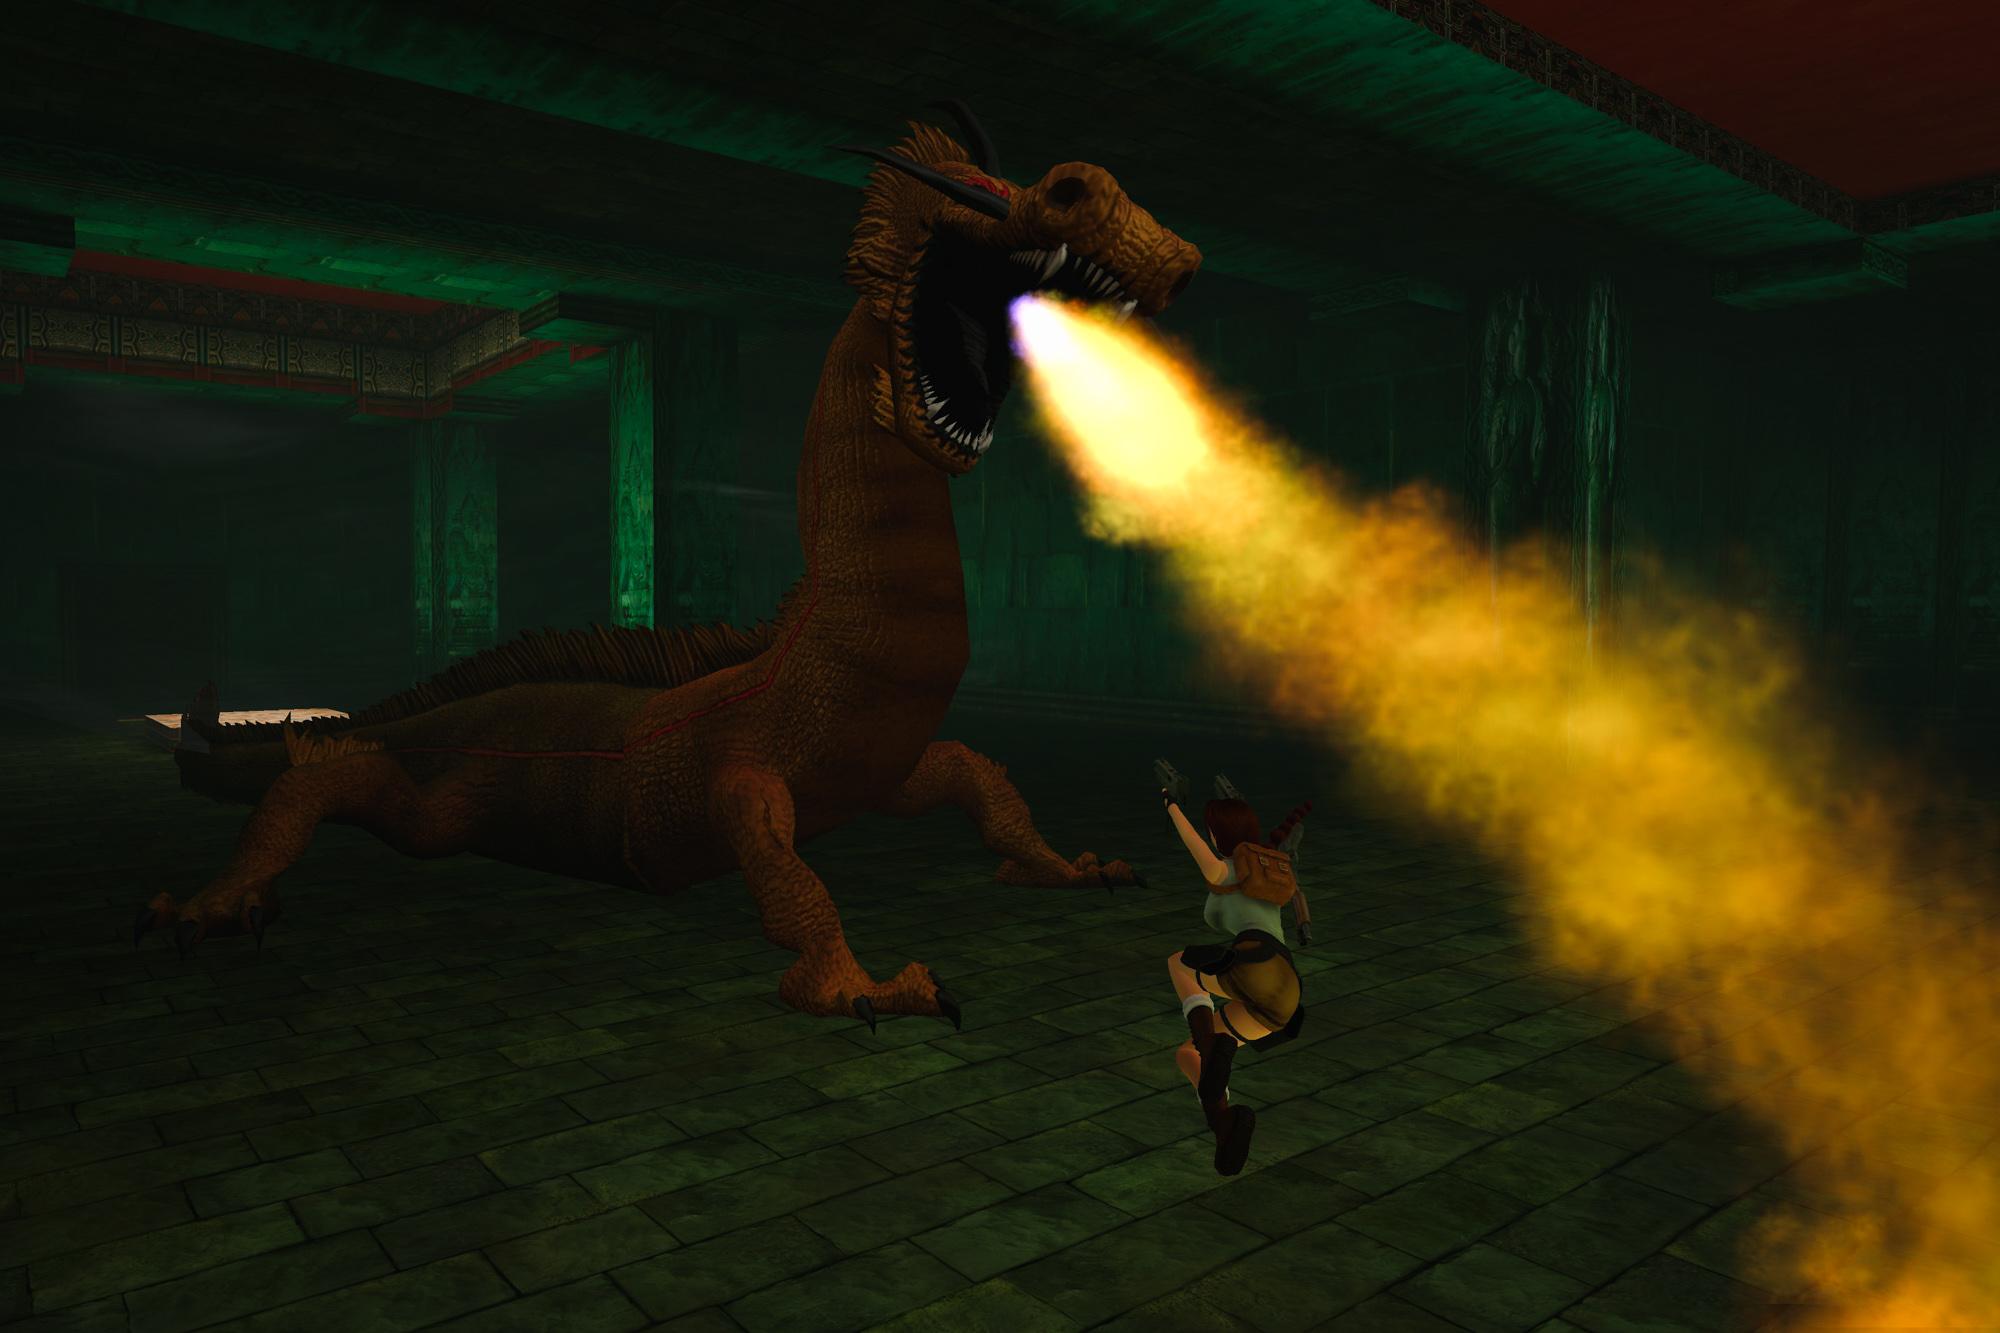 Marco Bartoli in the Dragon form, spitting fire at Lara.